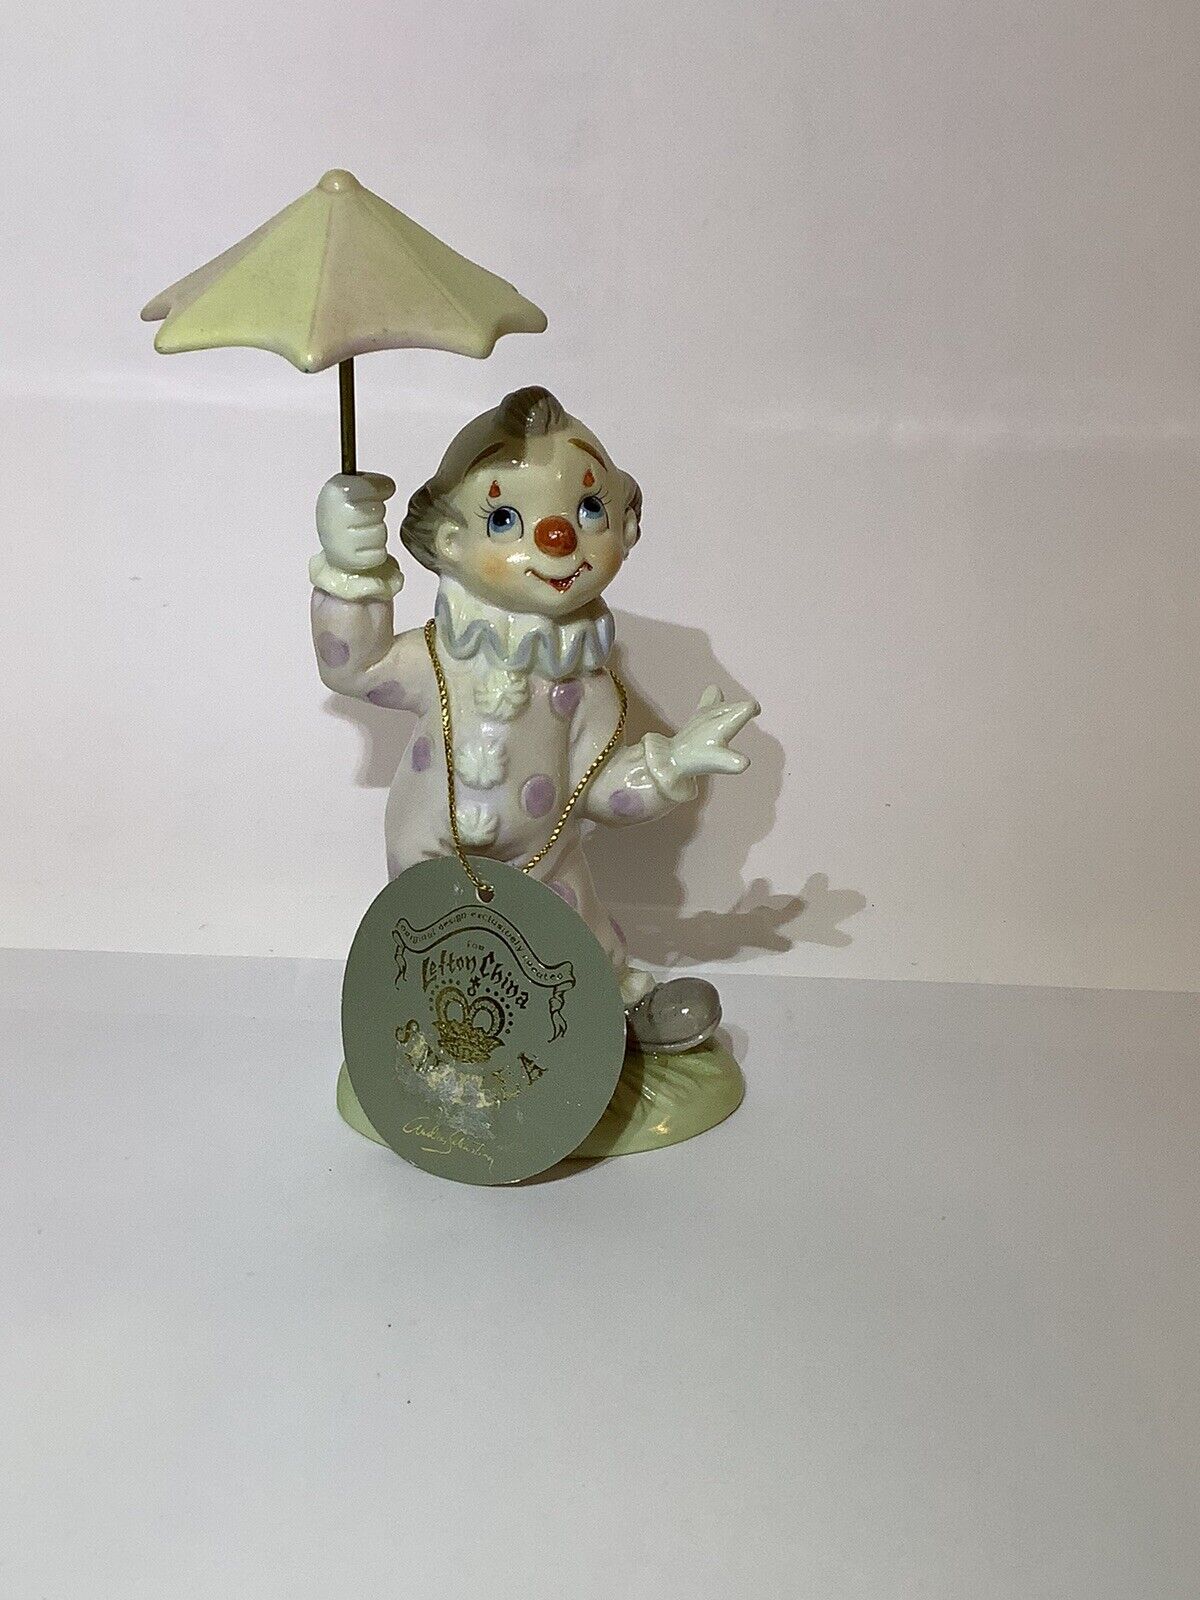 Vintage 1986 Lefton China Clown With Umbrella